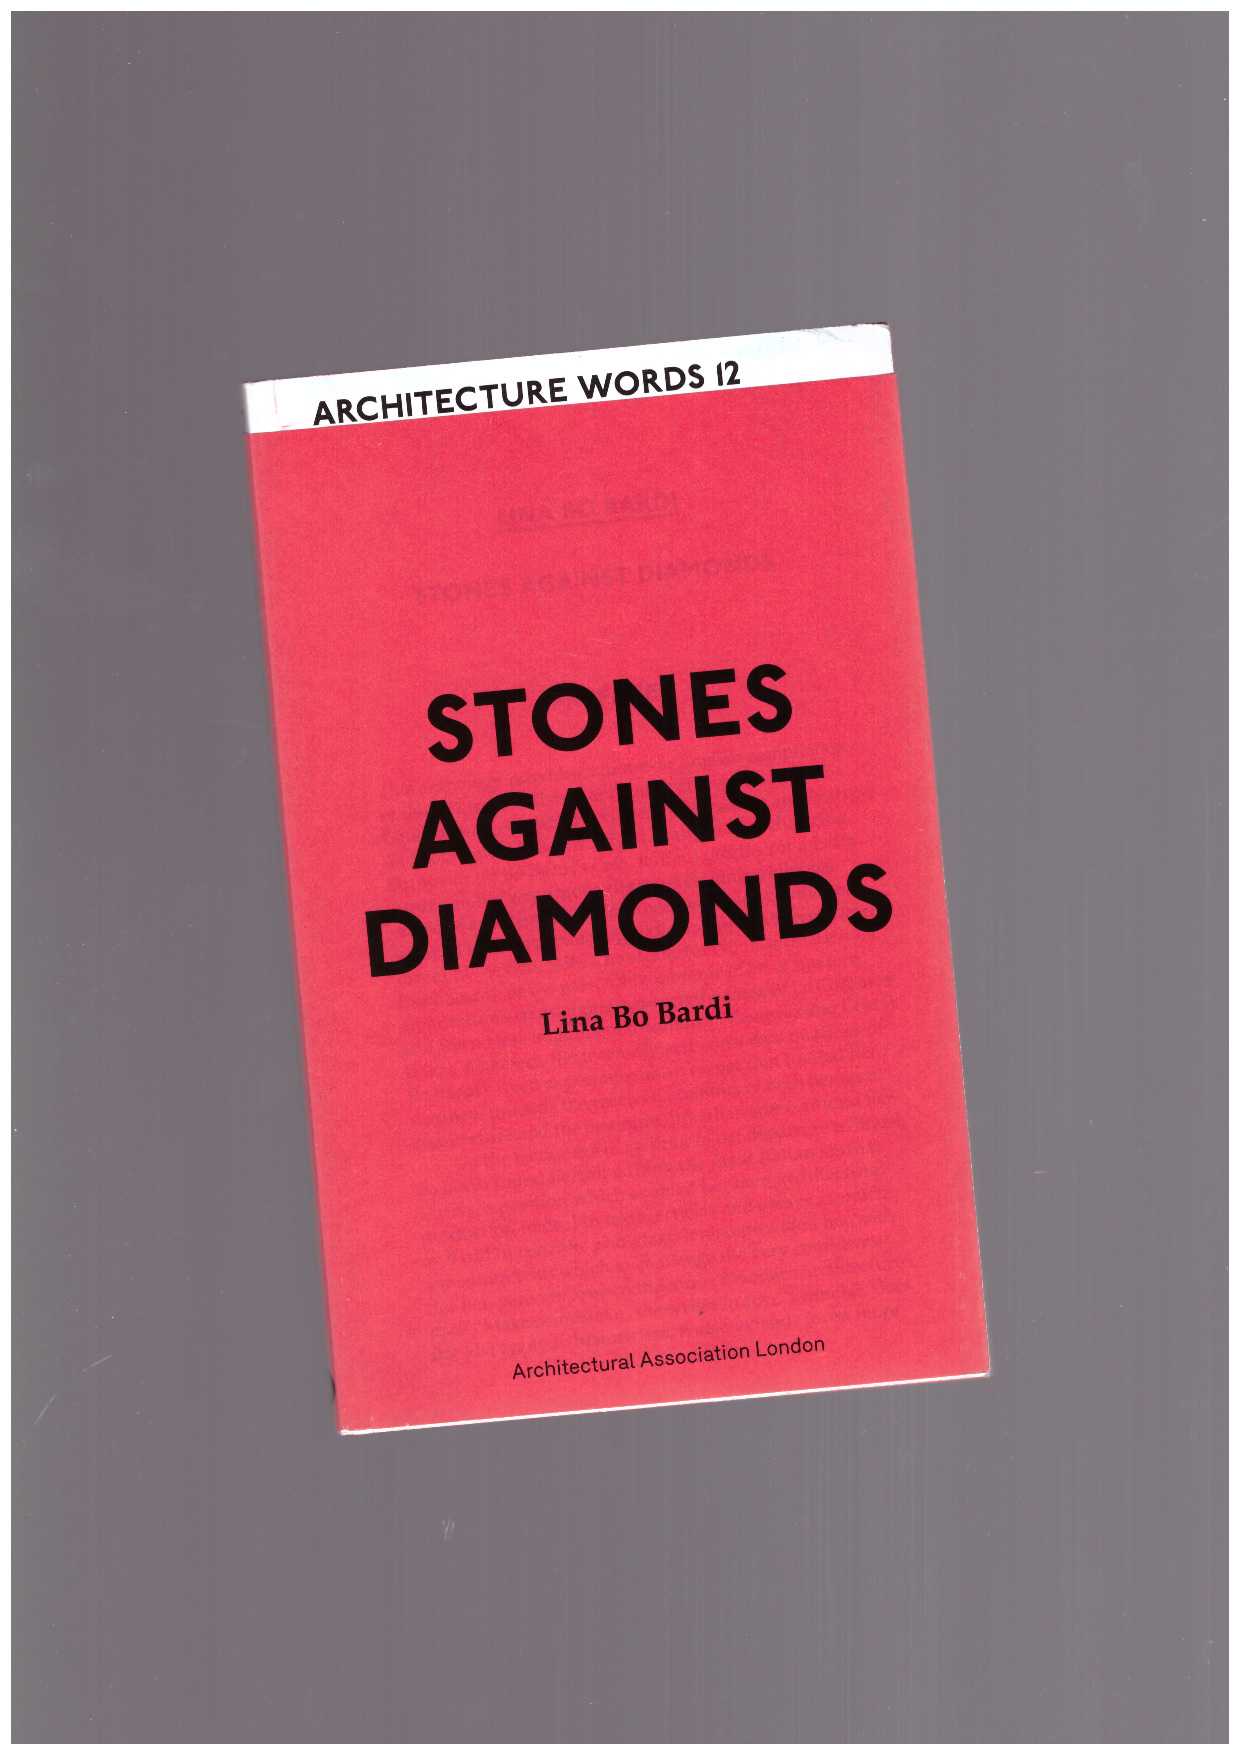 BO BARDI, Lina - Stones against diamonds